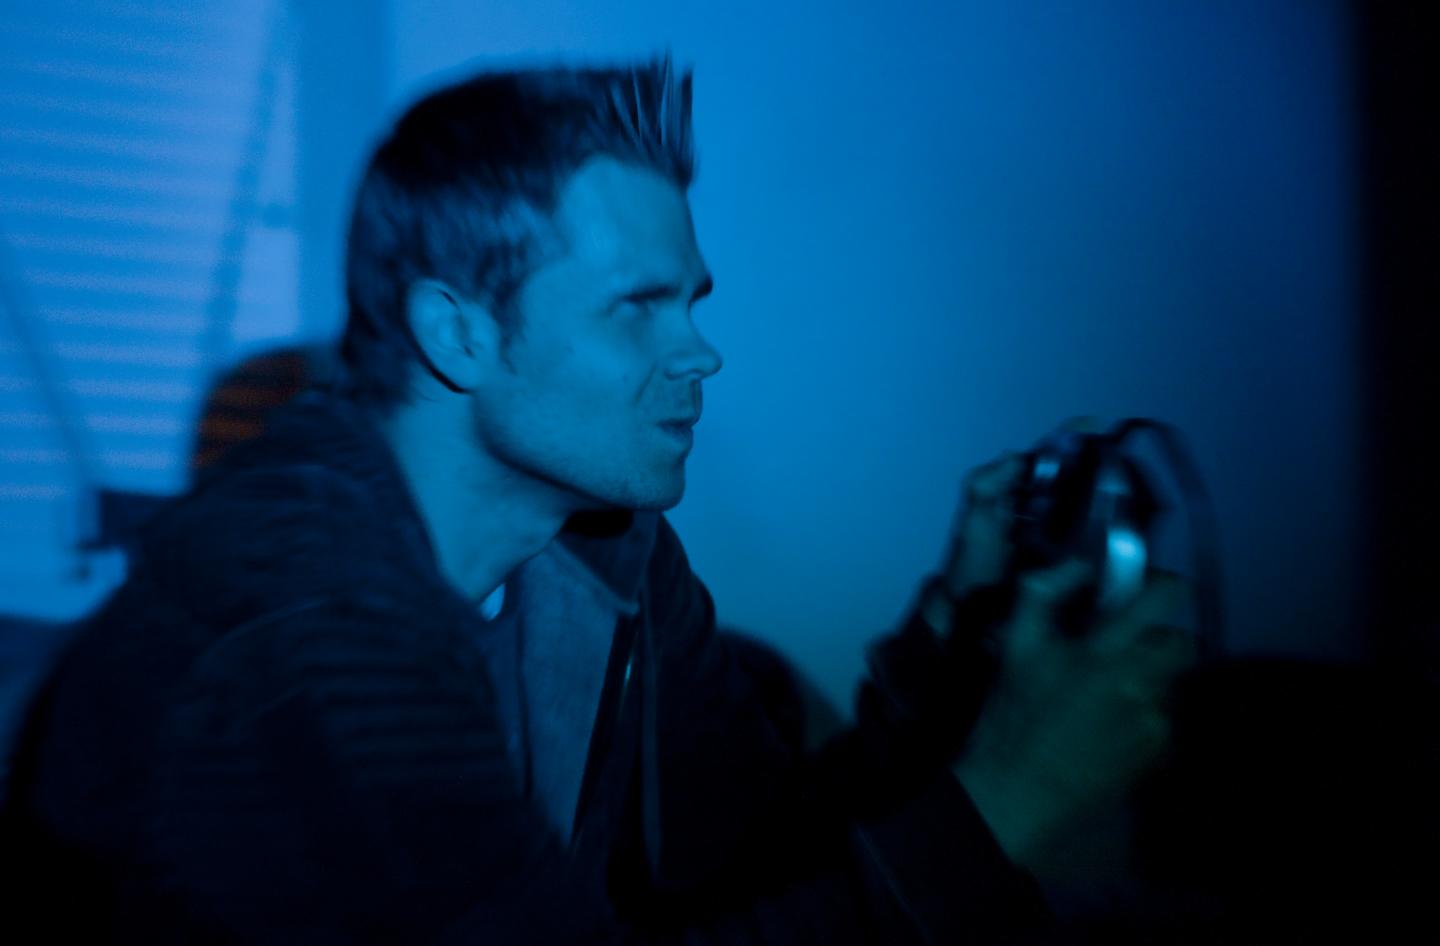 Man Playing Video Games in Dark Room